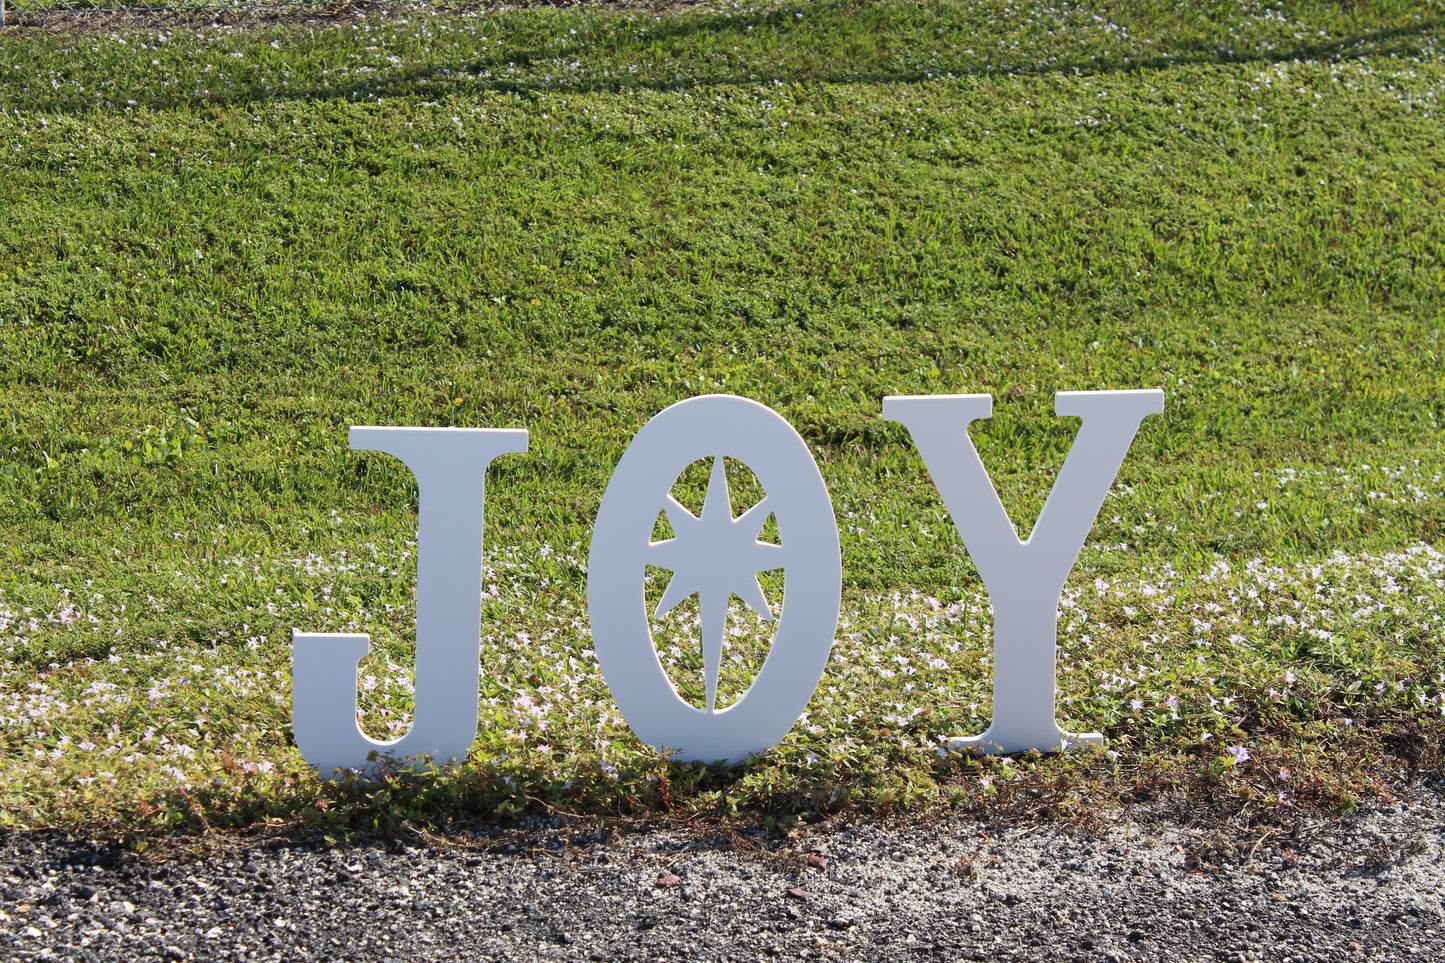 "JOY" with Star - SMALL (Yard Display)